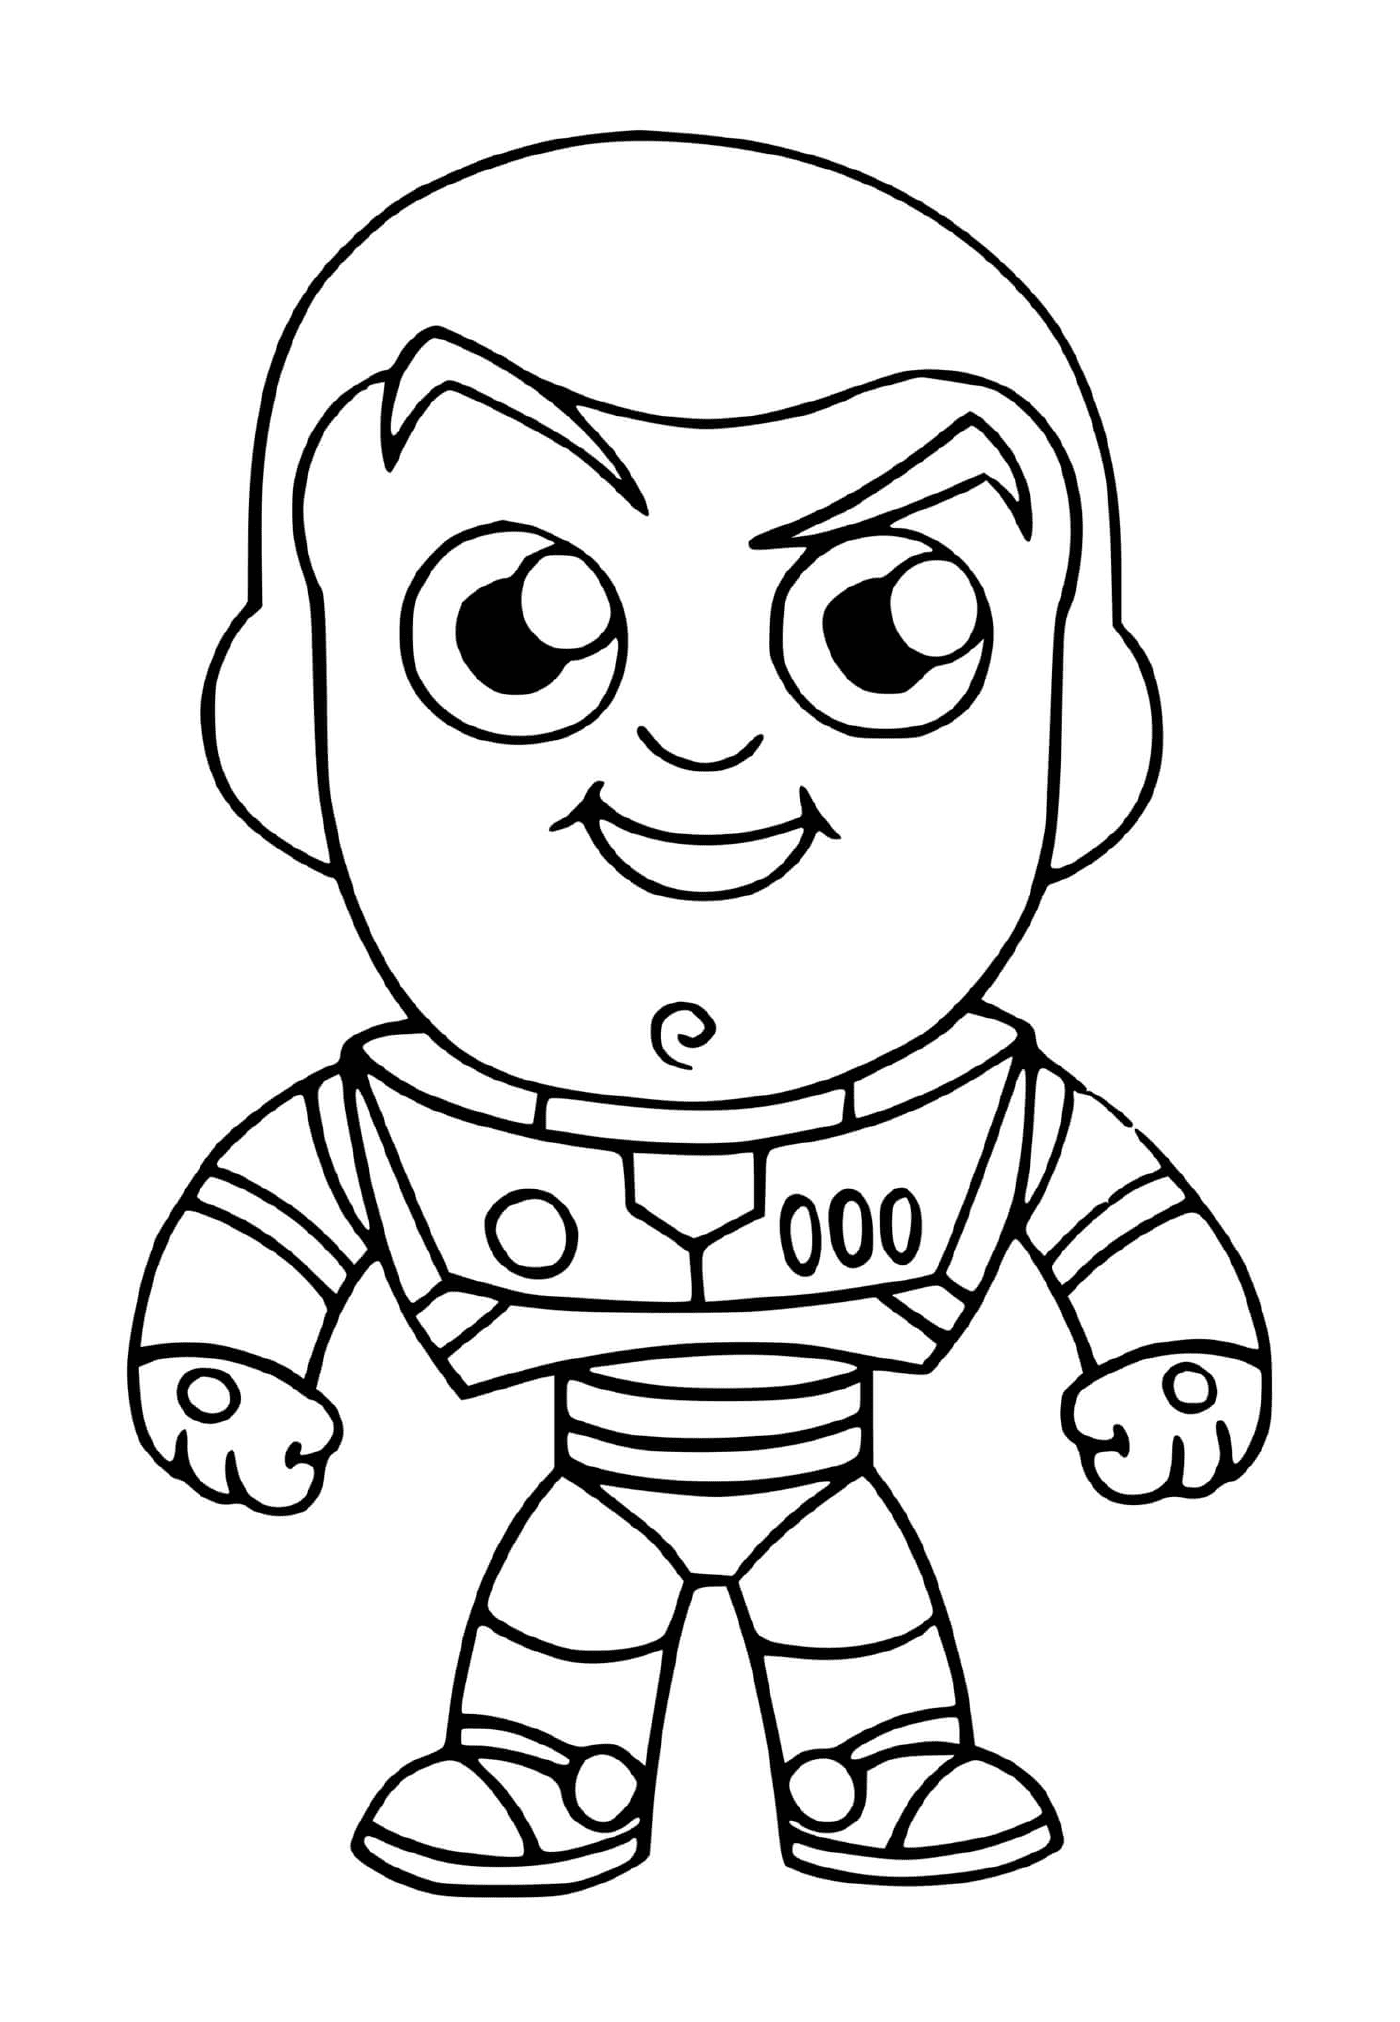  Buzz flash, personaggio del film Toy Story 